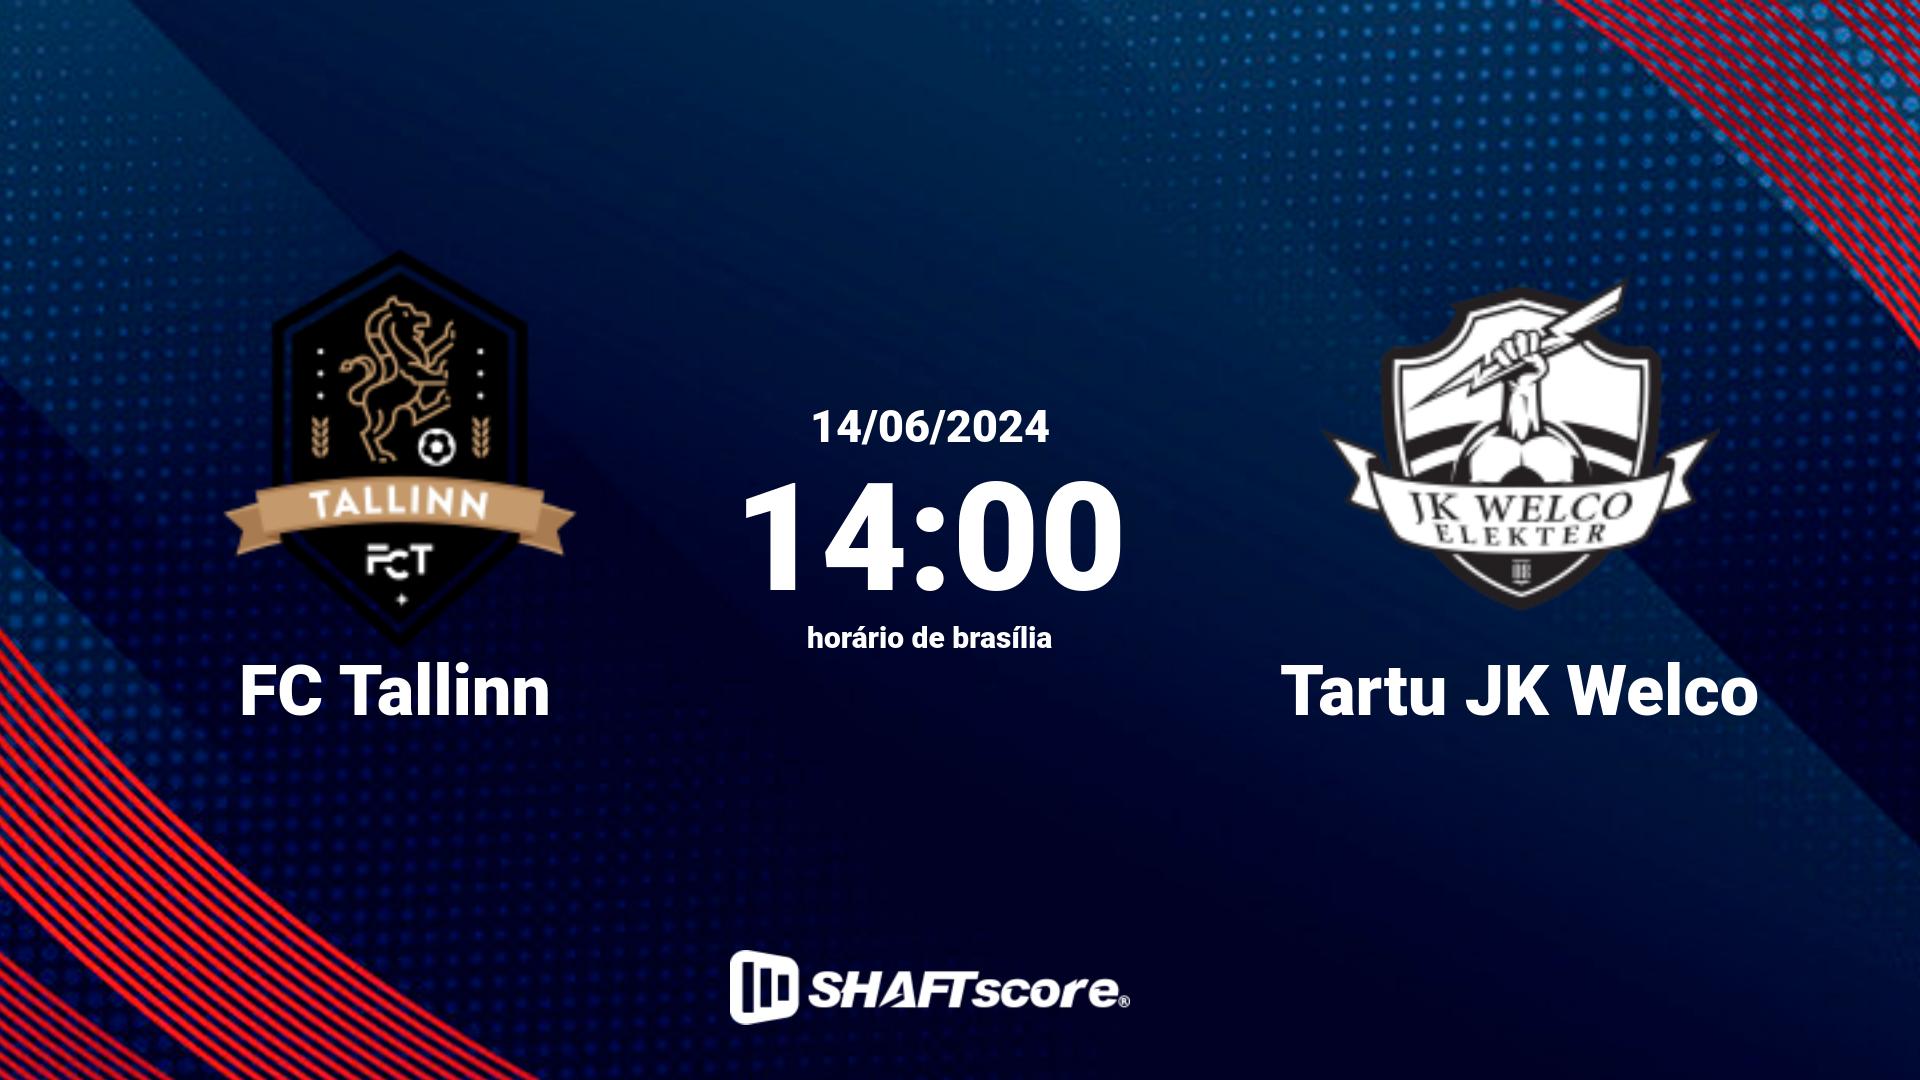 Estatísticas do jogo FC Tallinn vs Tartu JK Welco 14.06 14:00